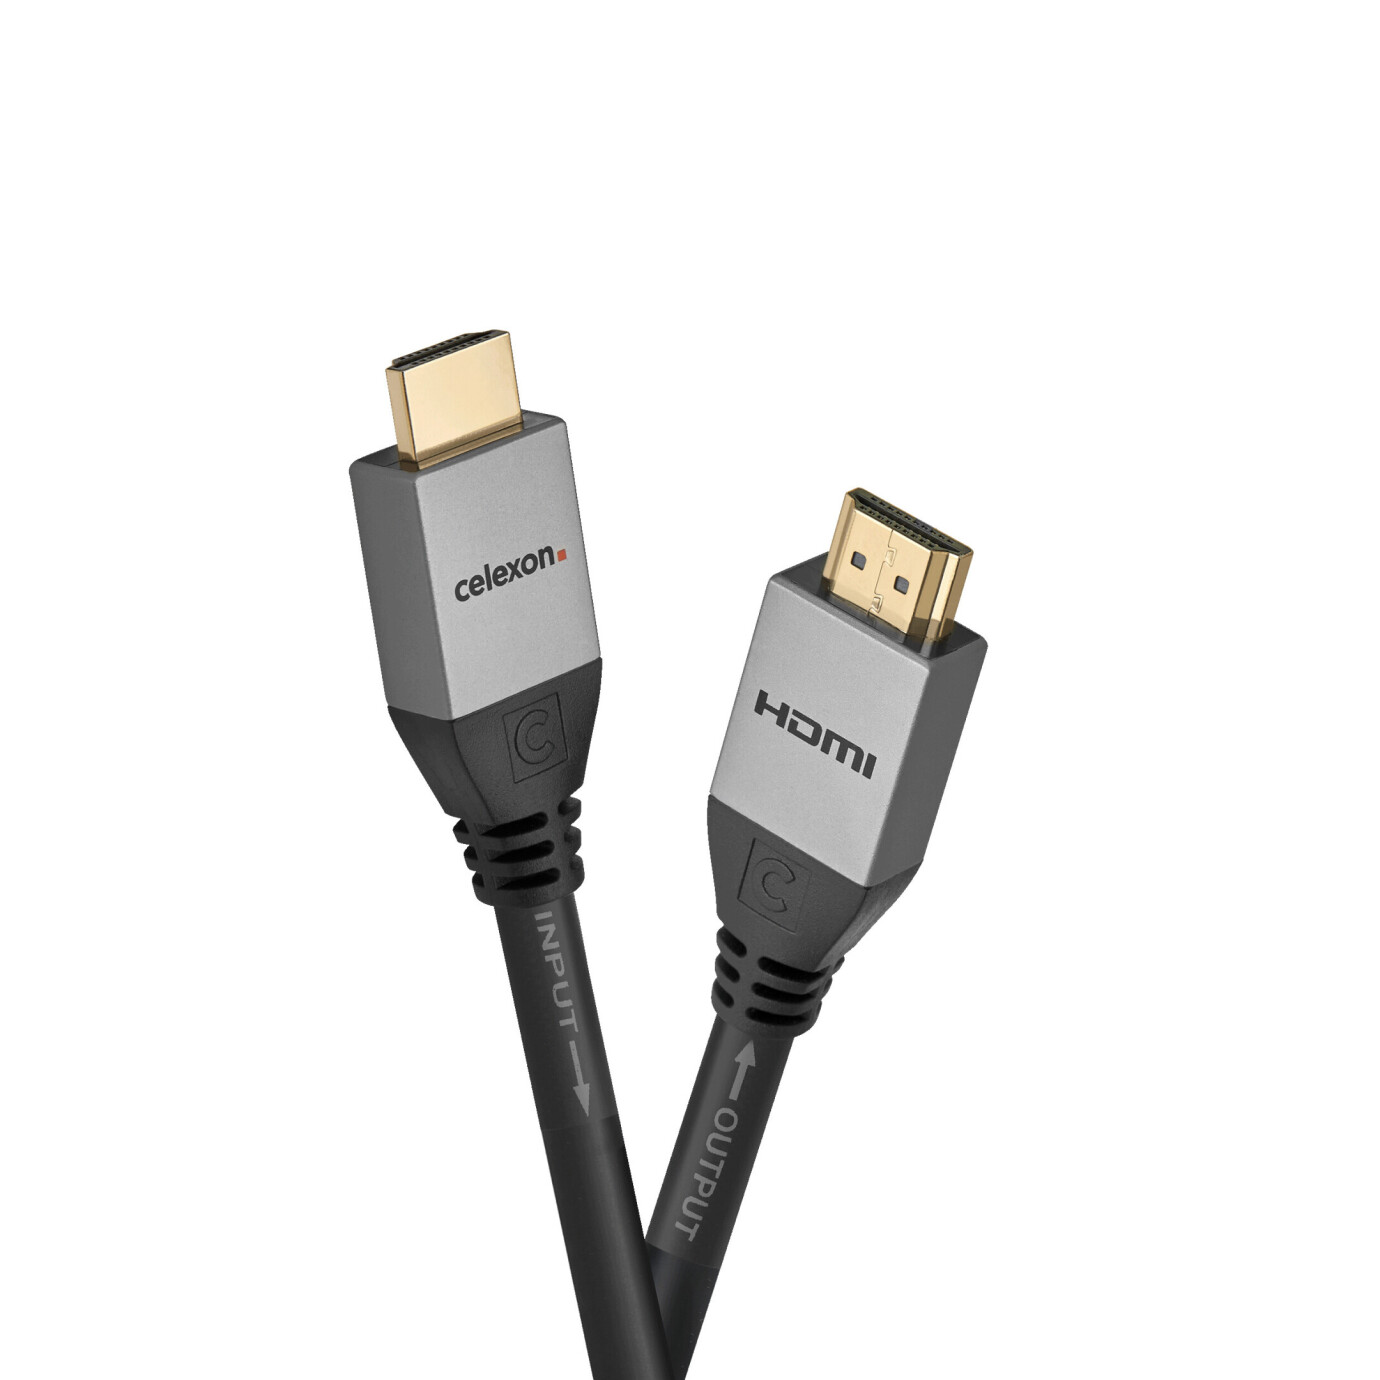 celexon aktives HDMI Kabel mit Ethernet - 2.0a/b 4K 7,5m - Professional Line